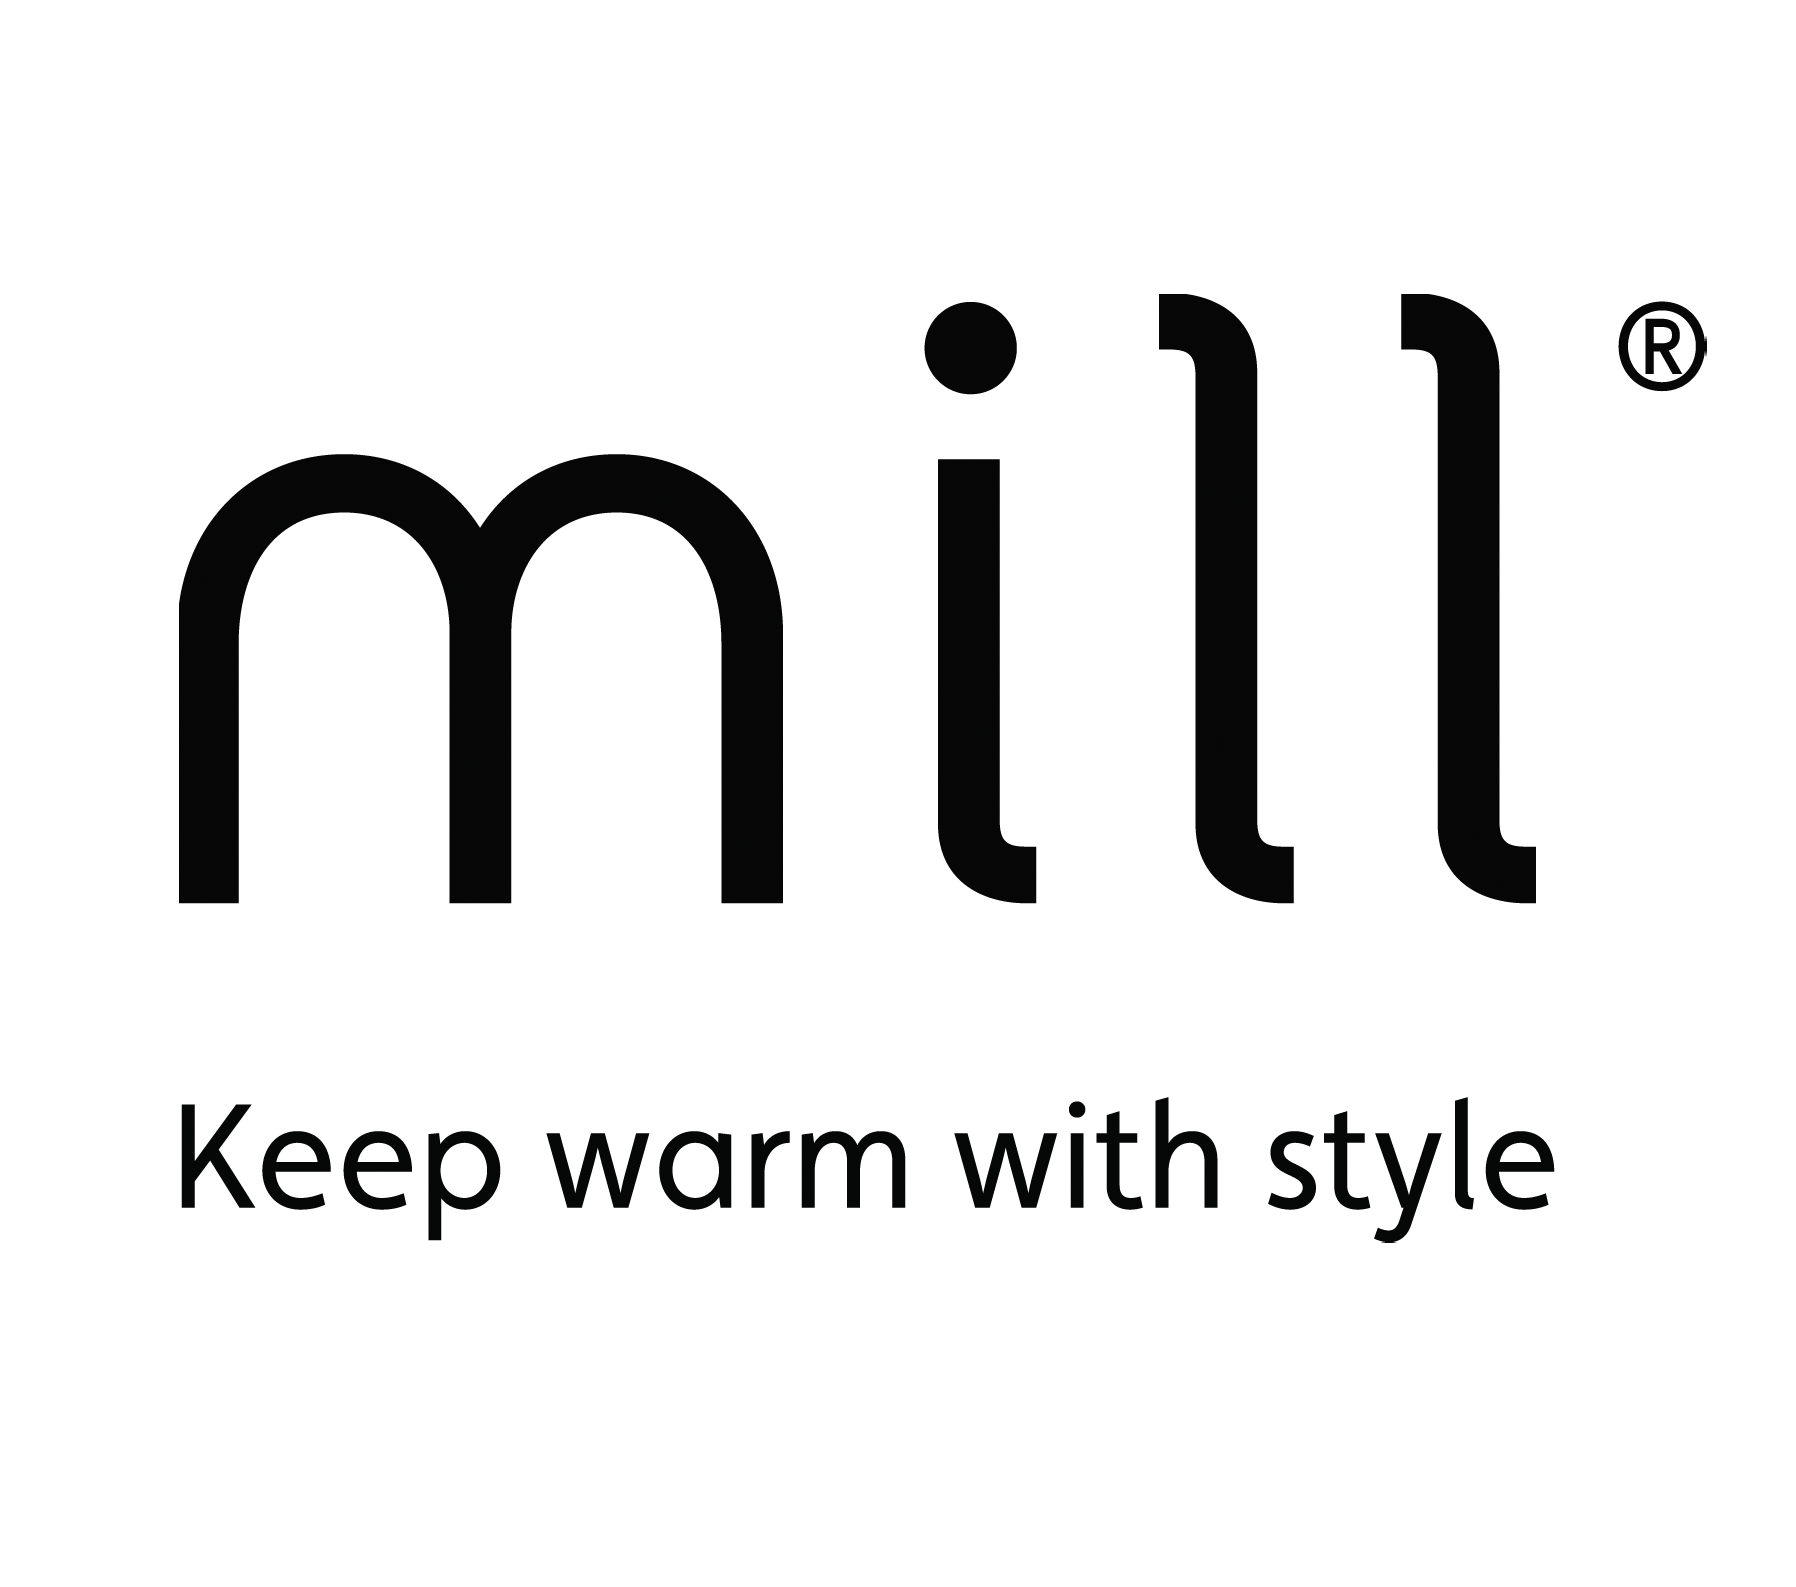 mill logo black and white